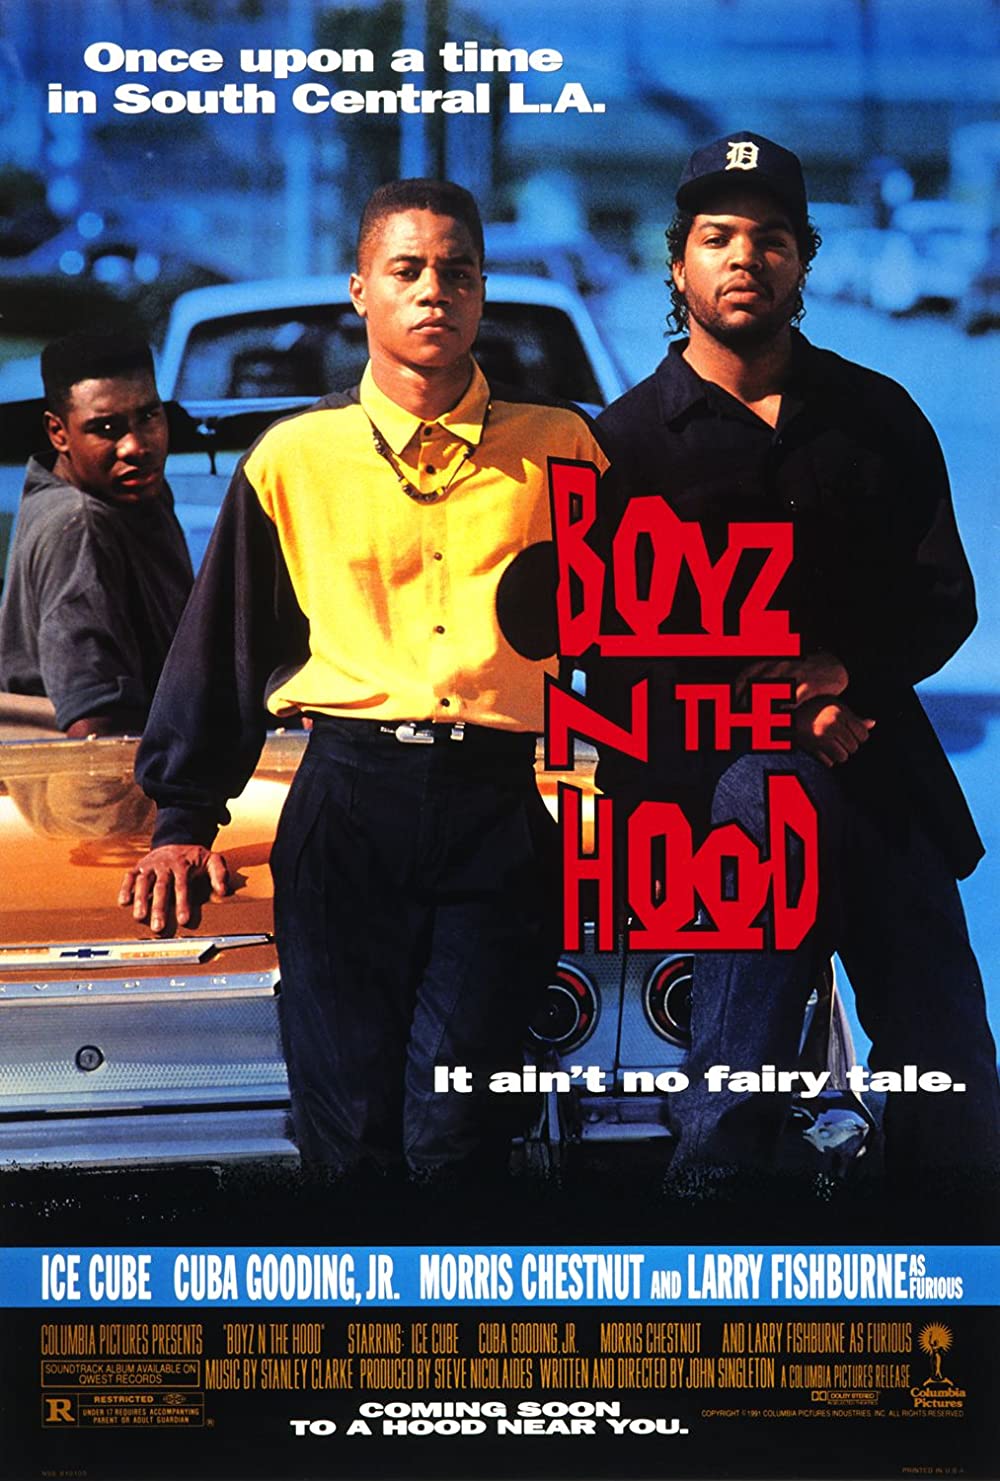 Filmbeschreibung zu Boyz 'n in the hood